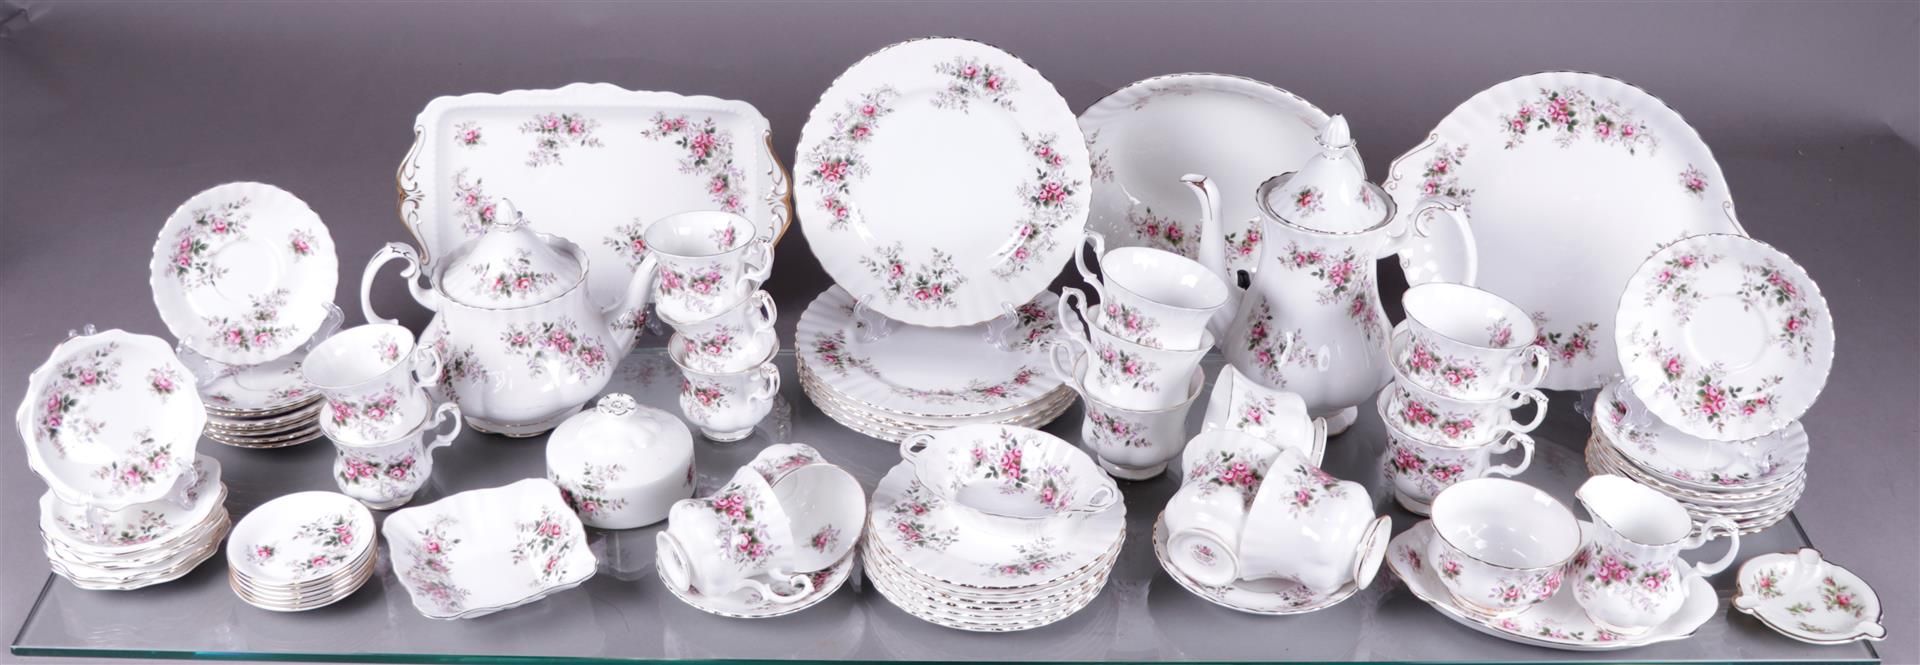 A very large lot of Royal Albert Lavender Rose tableware.